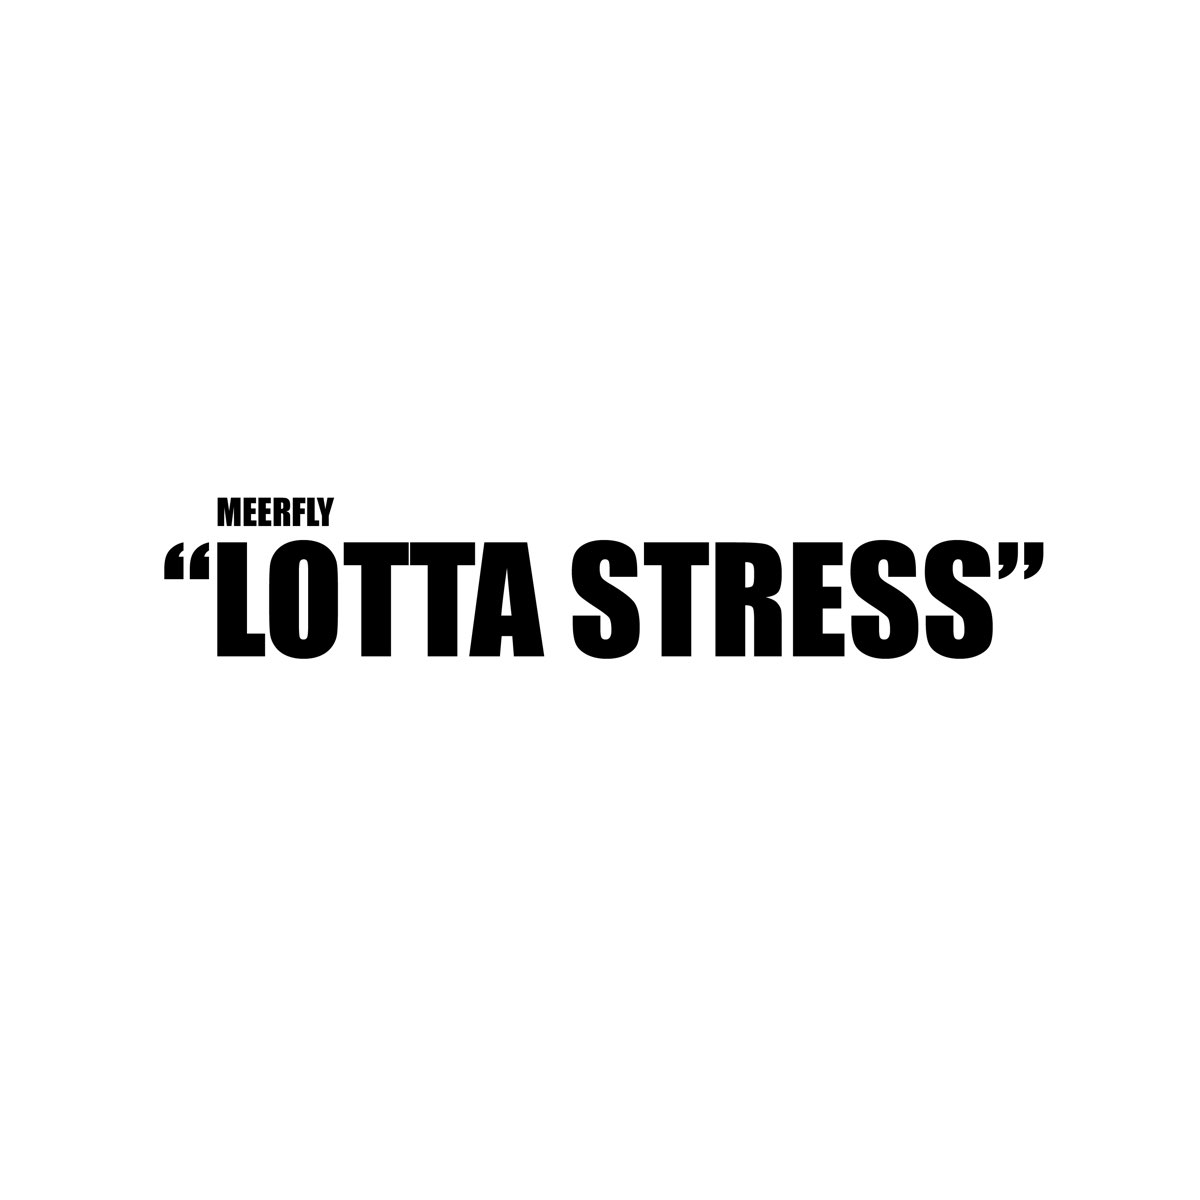 Stress text